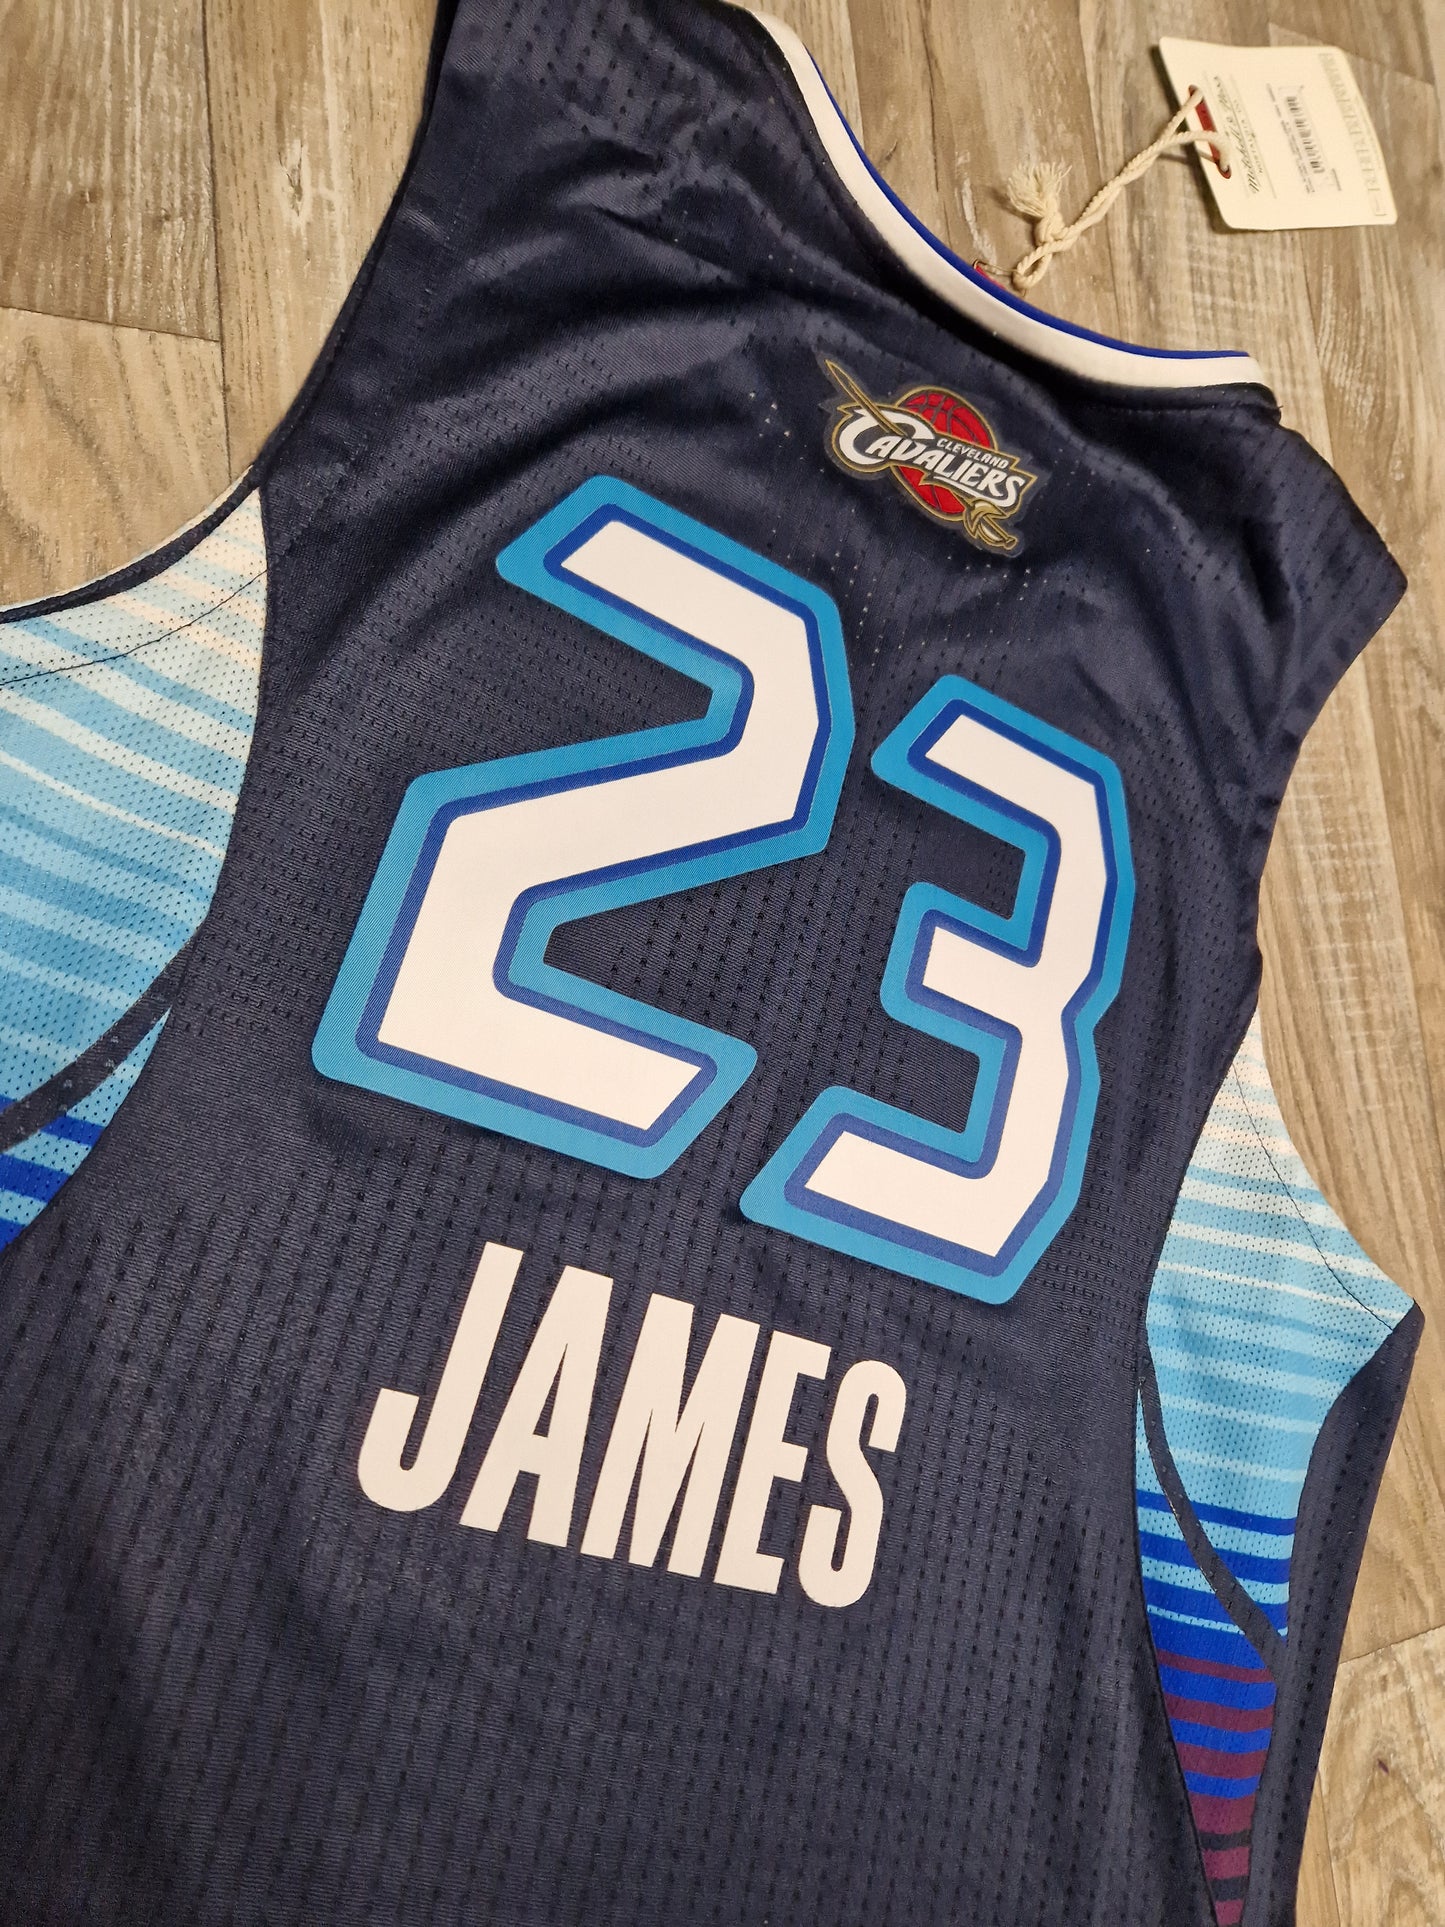 LeBron James Authentic NBA All Star 2009 Jersey Size Medium